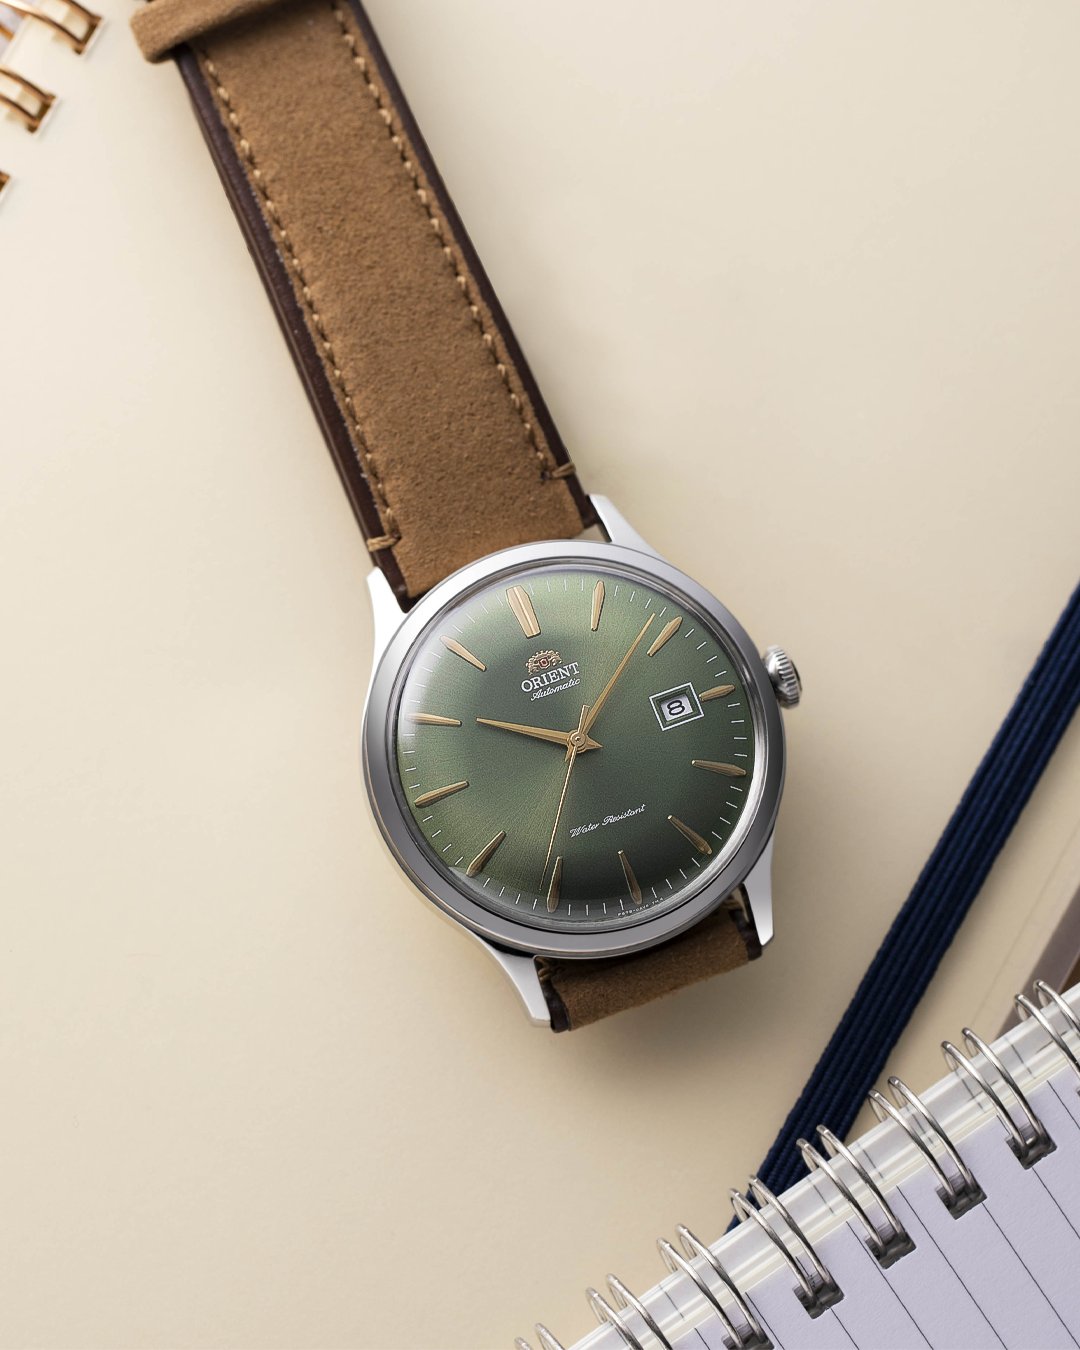 Orient Bambino: A Smaller Watch Making A Big Impact